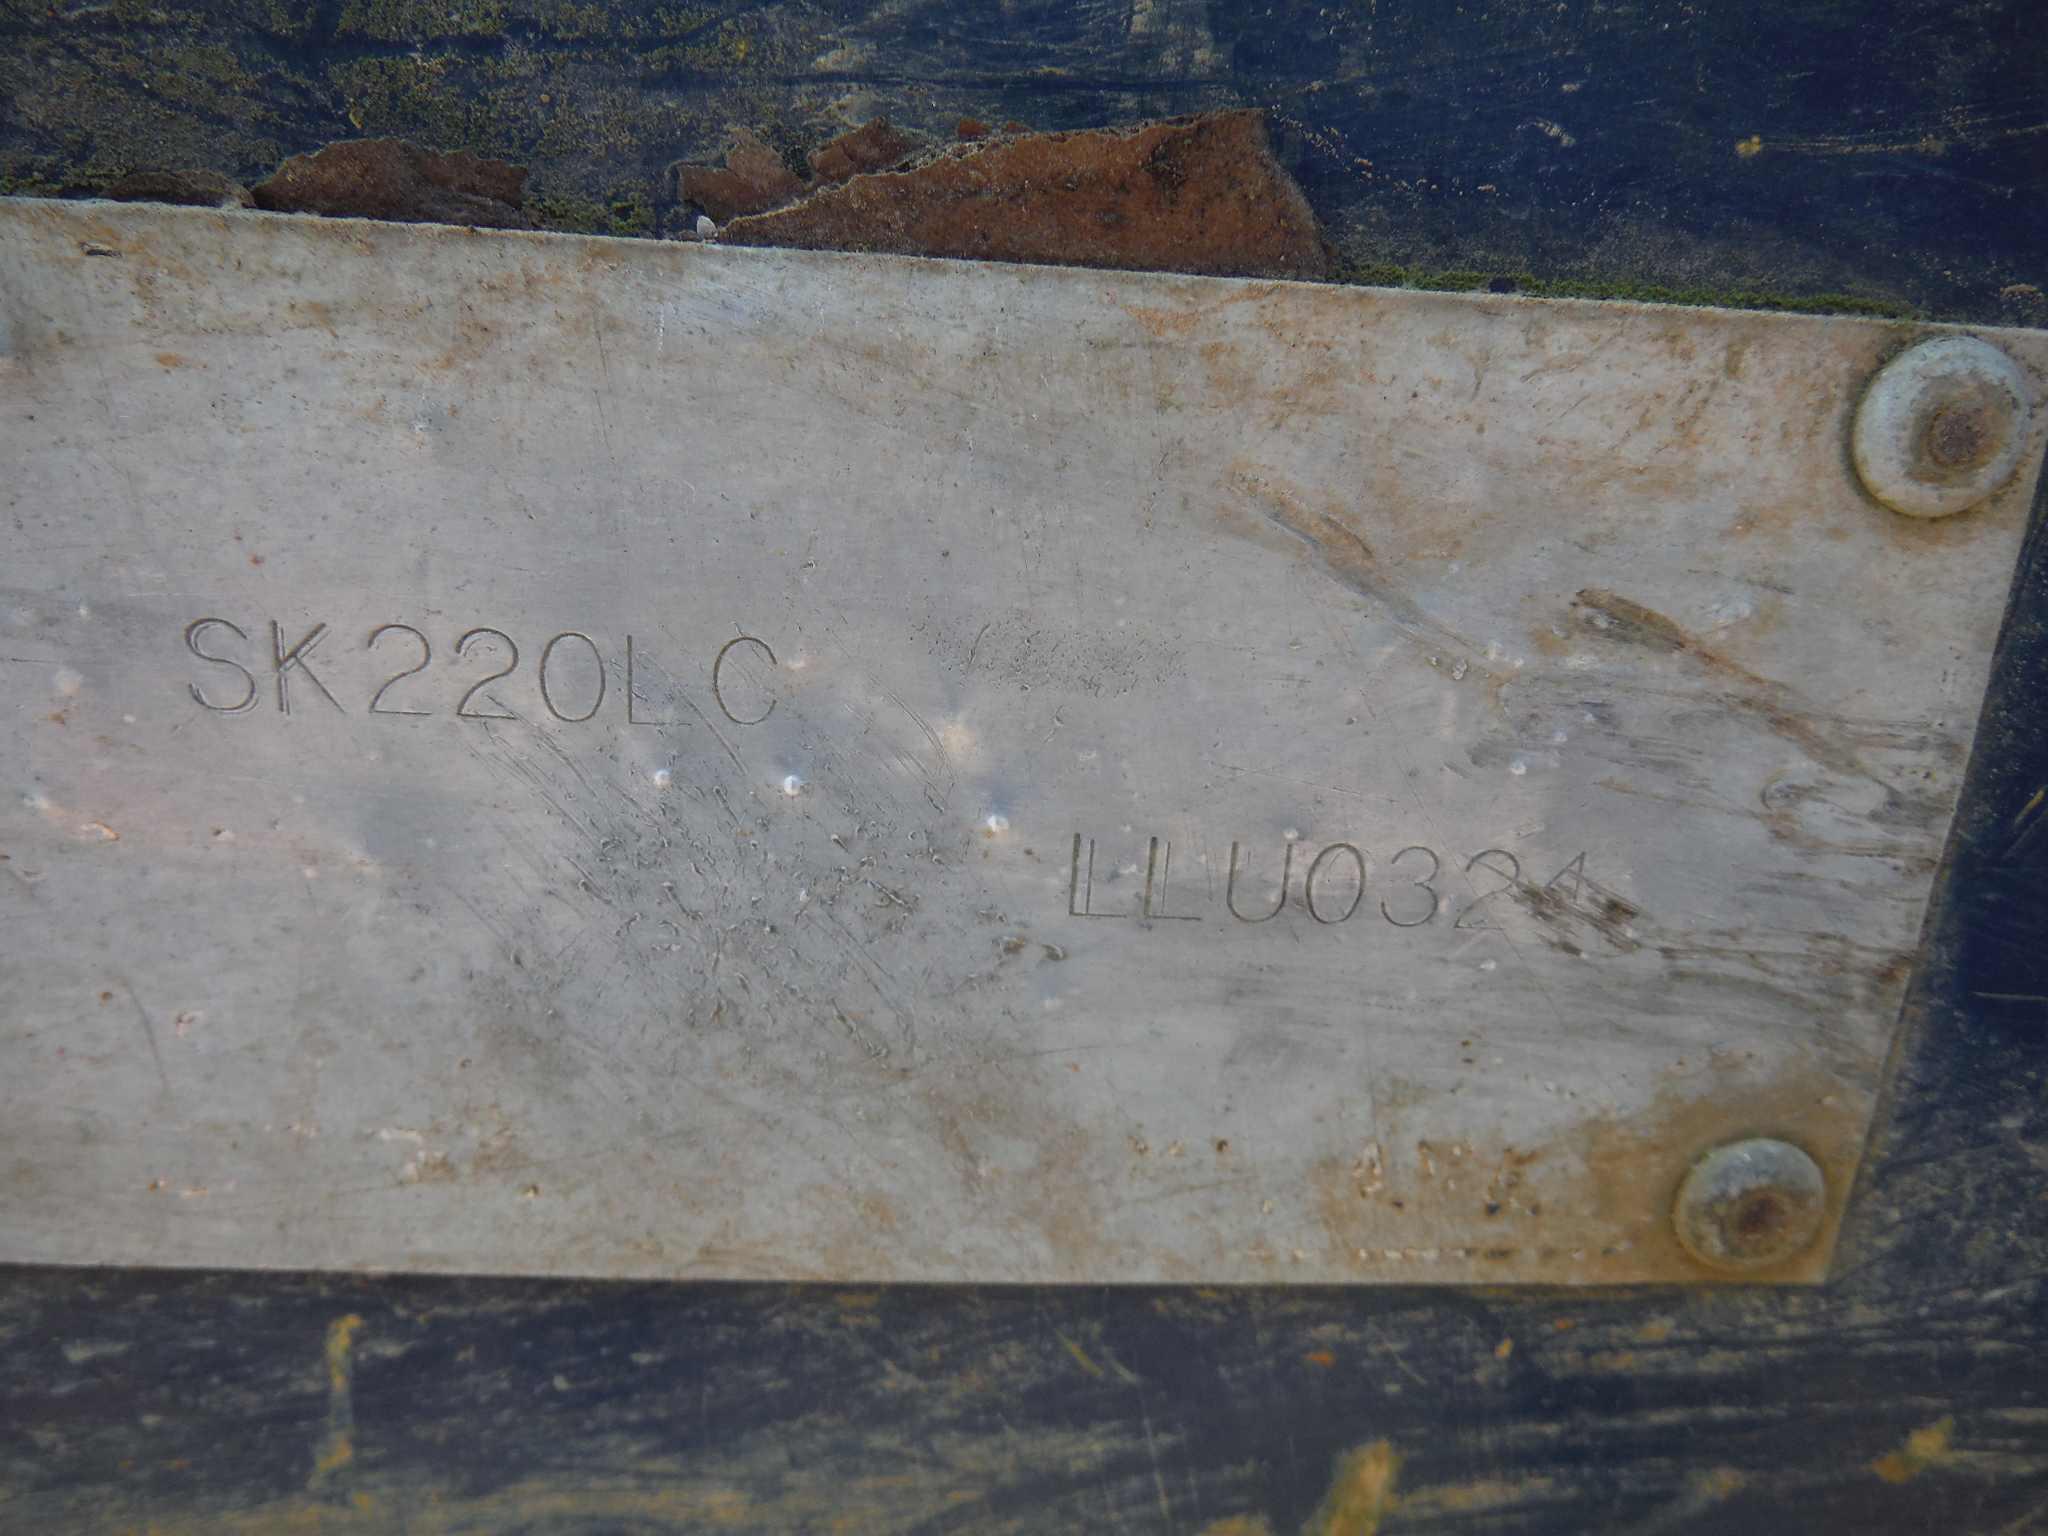 1991 Kobelco SK220LC Excavator, s/n LLU0324: Manual Thumb, Mixing Water in